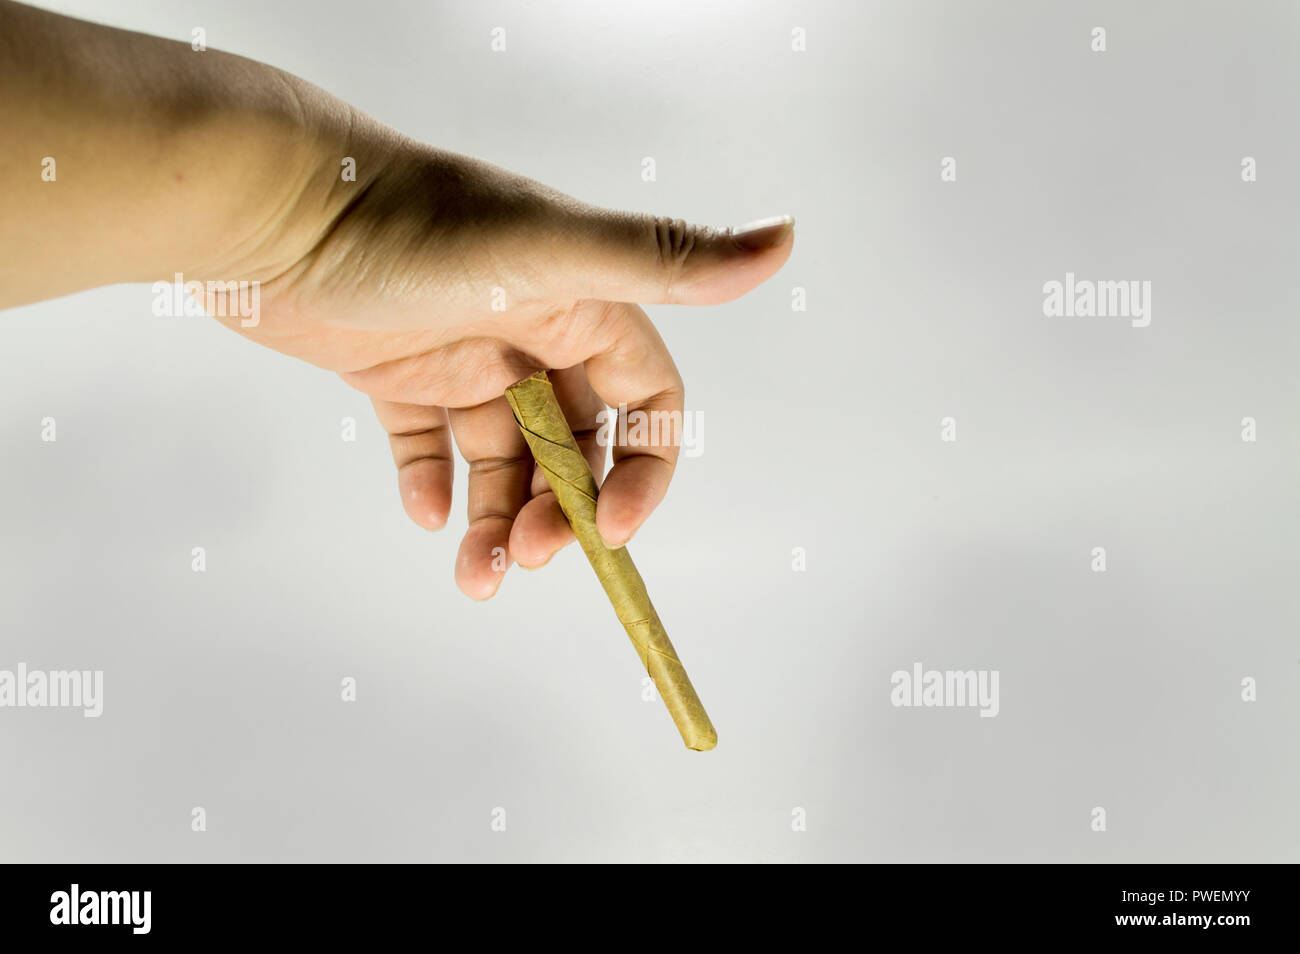 Hand holding a Native southeast asia cigarette. Stock Photo